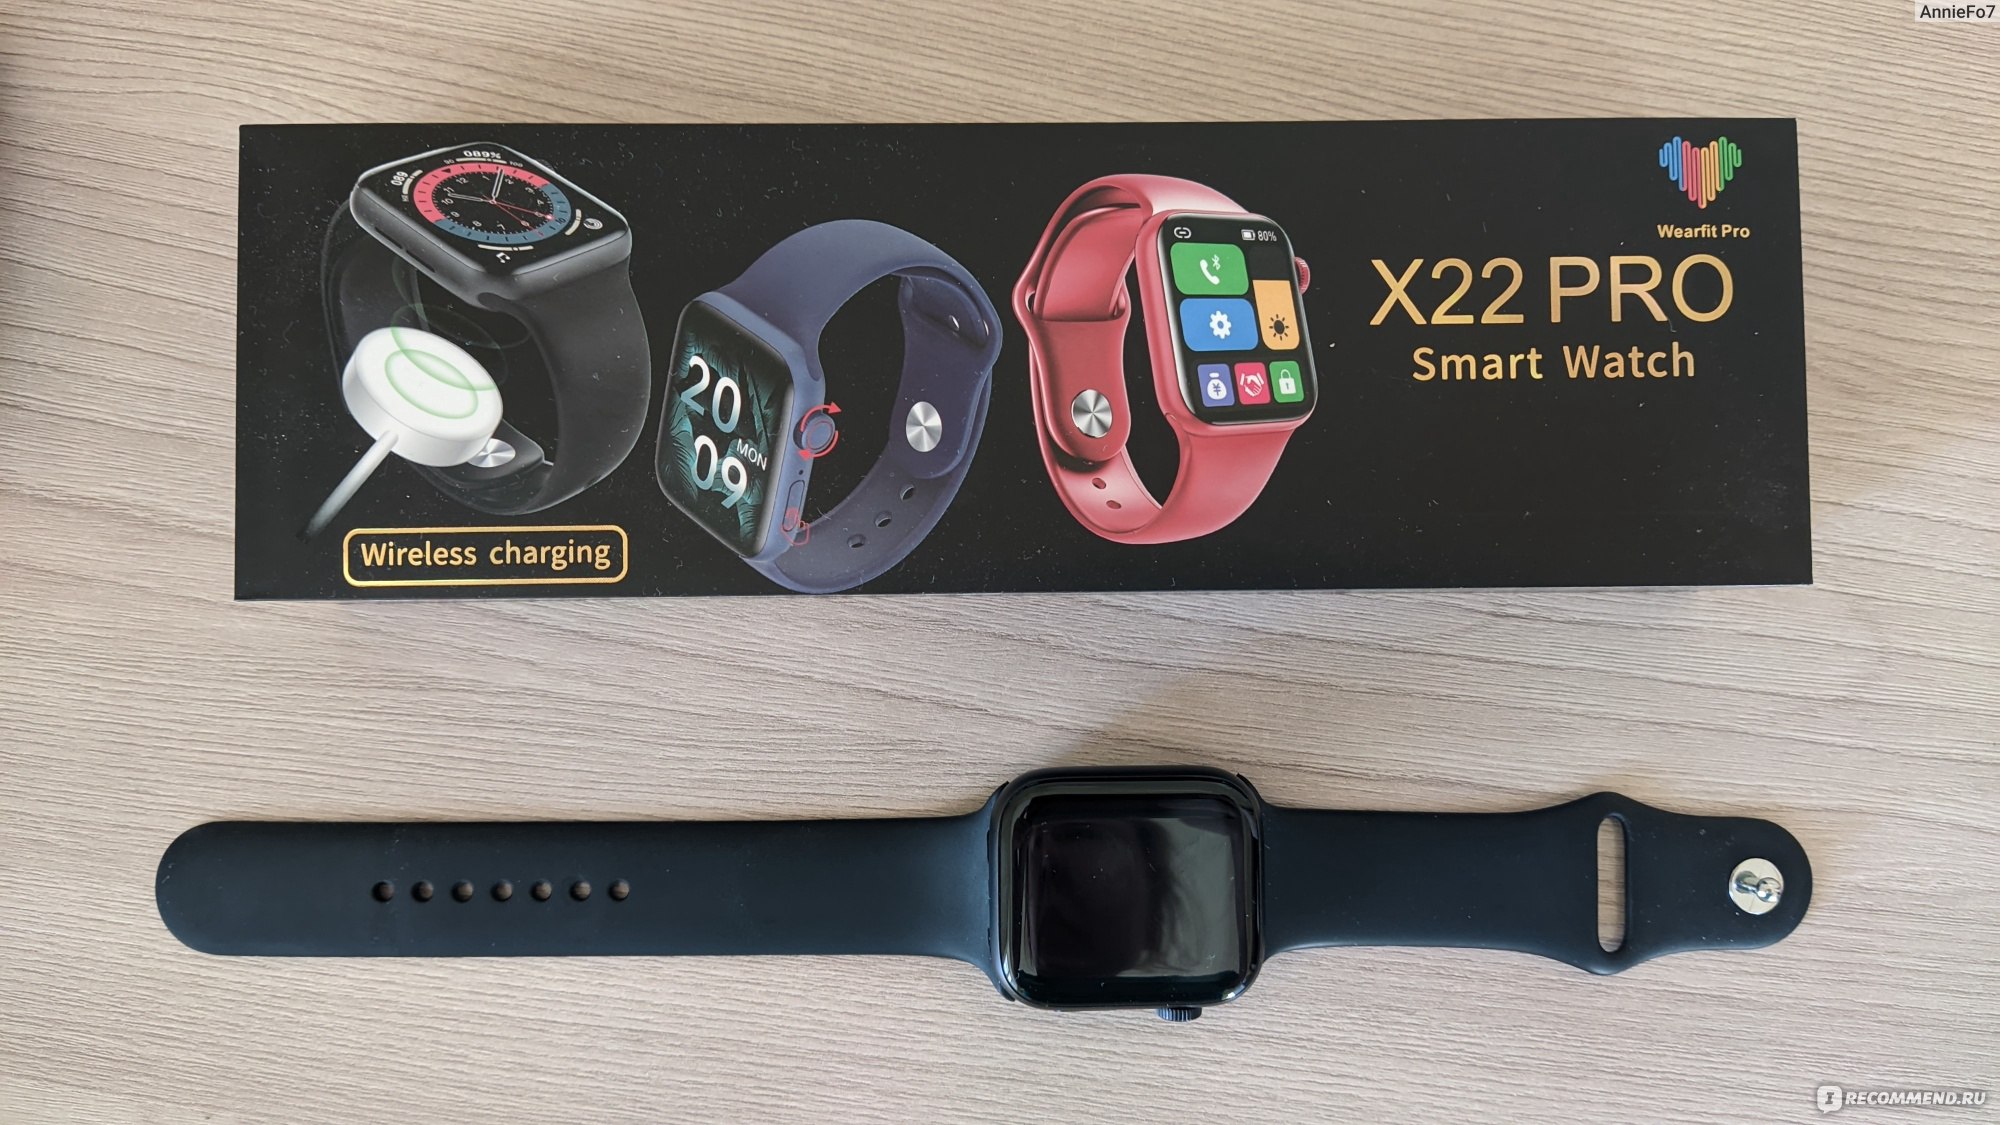 Программу часы x8 pro. Смарт часы x22 Pro. Смарт часы Wearfit Pro x22. Smart watch x22 Pro Max. Часы x22 Pro NFC.